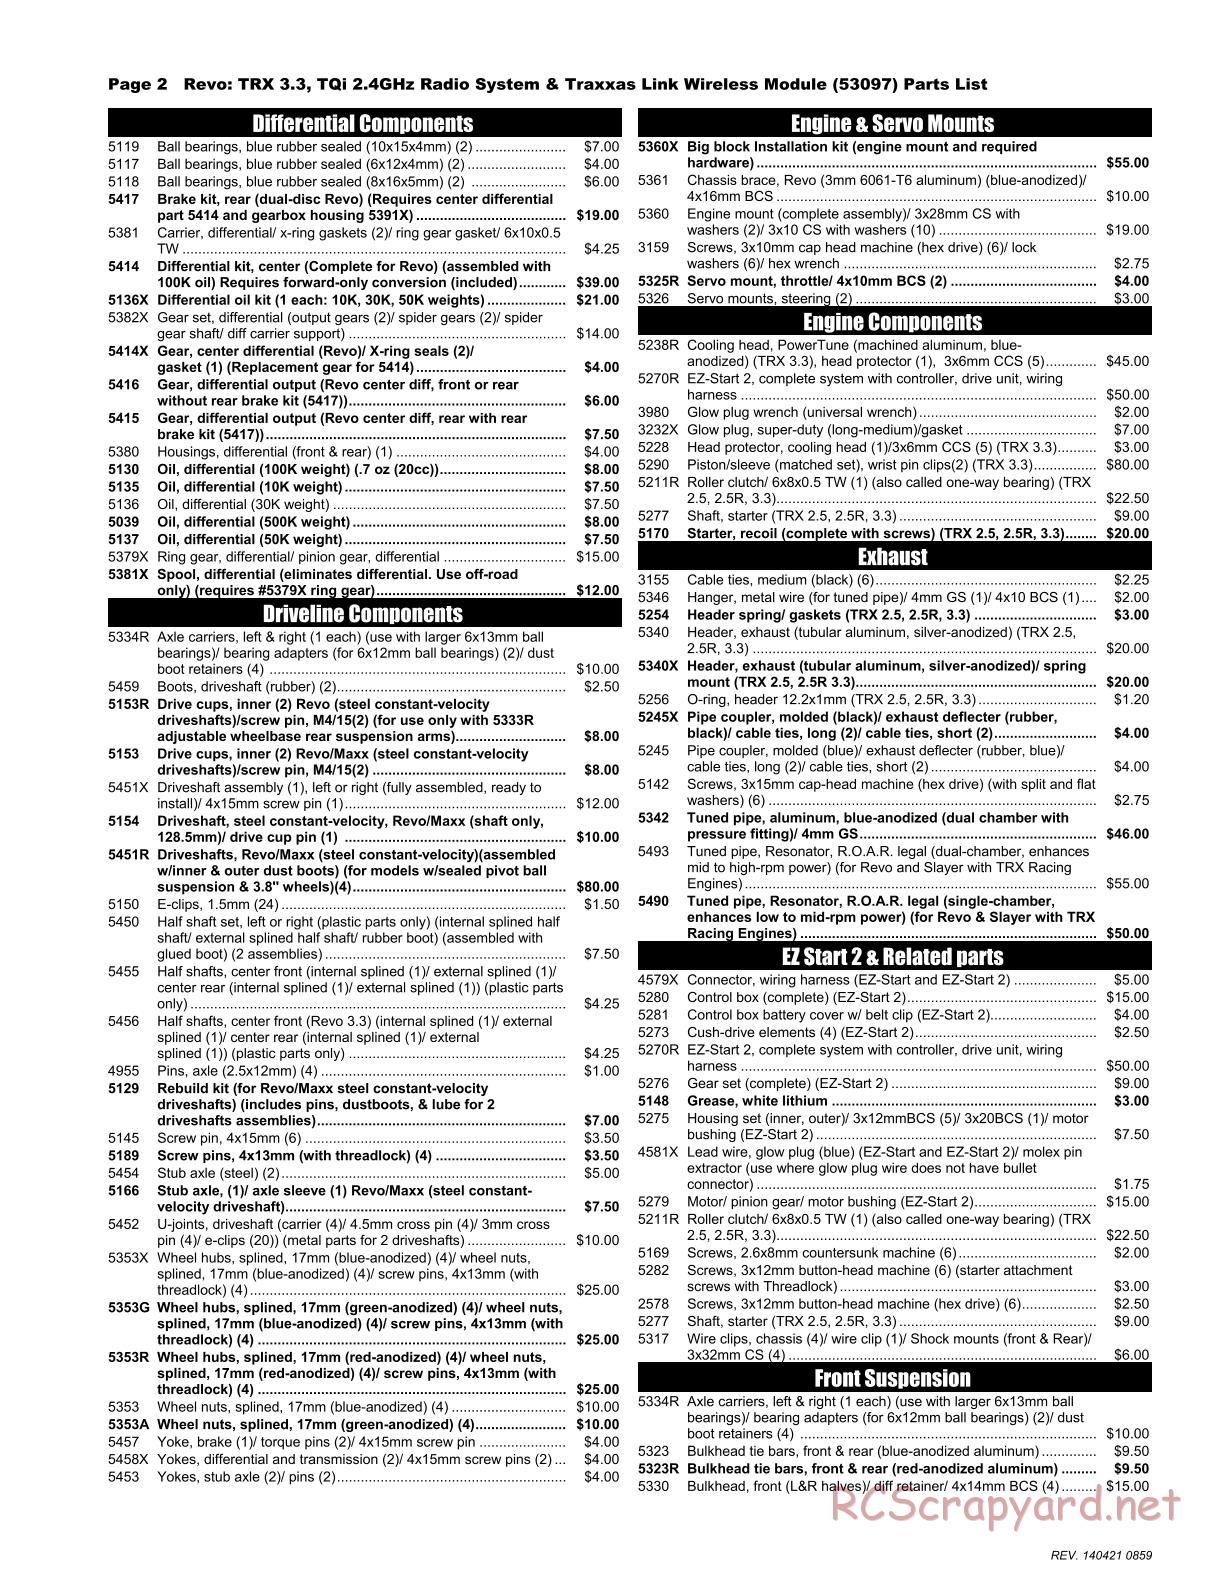 Traxxas - Revo 3.3 (2014) - Parts List - Page 2